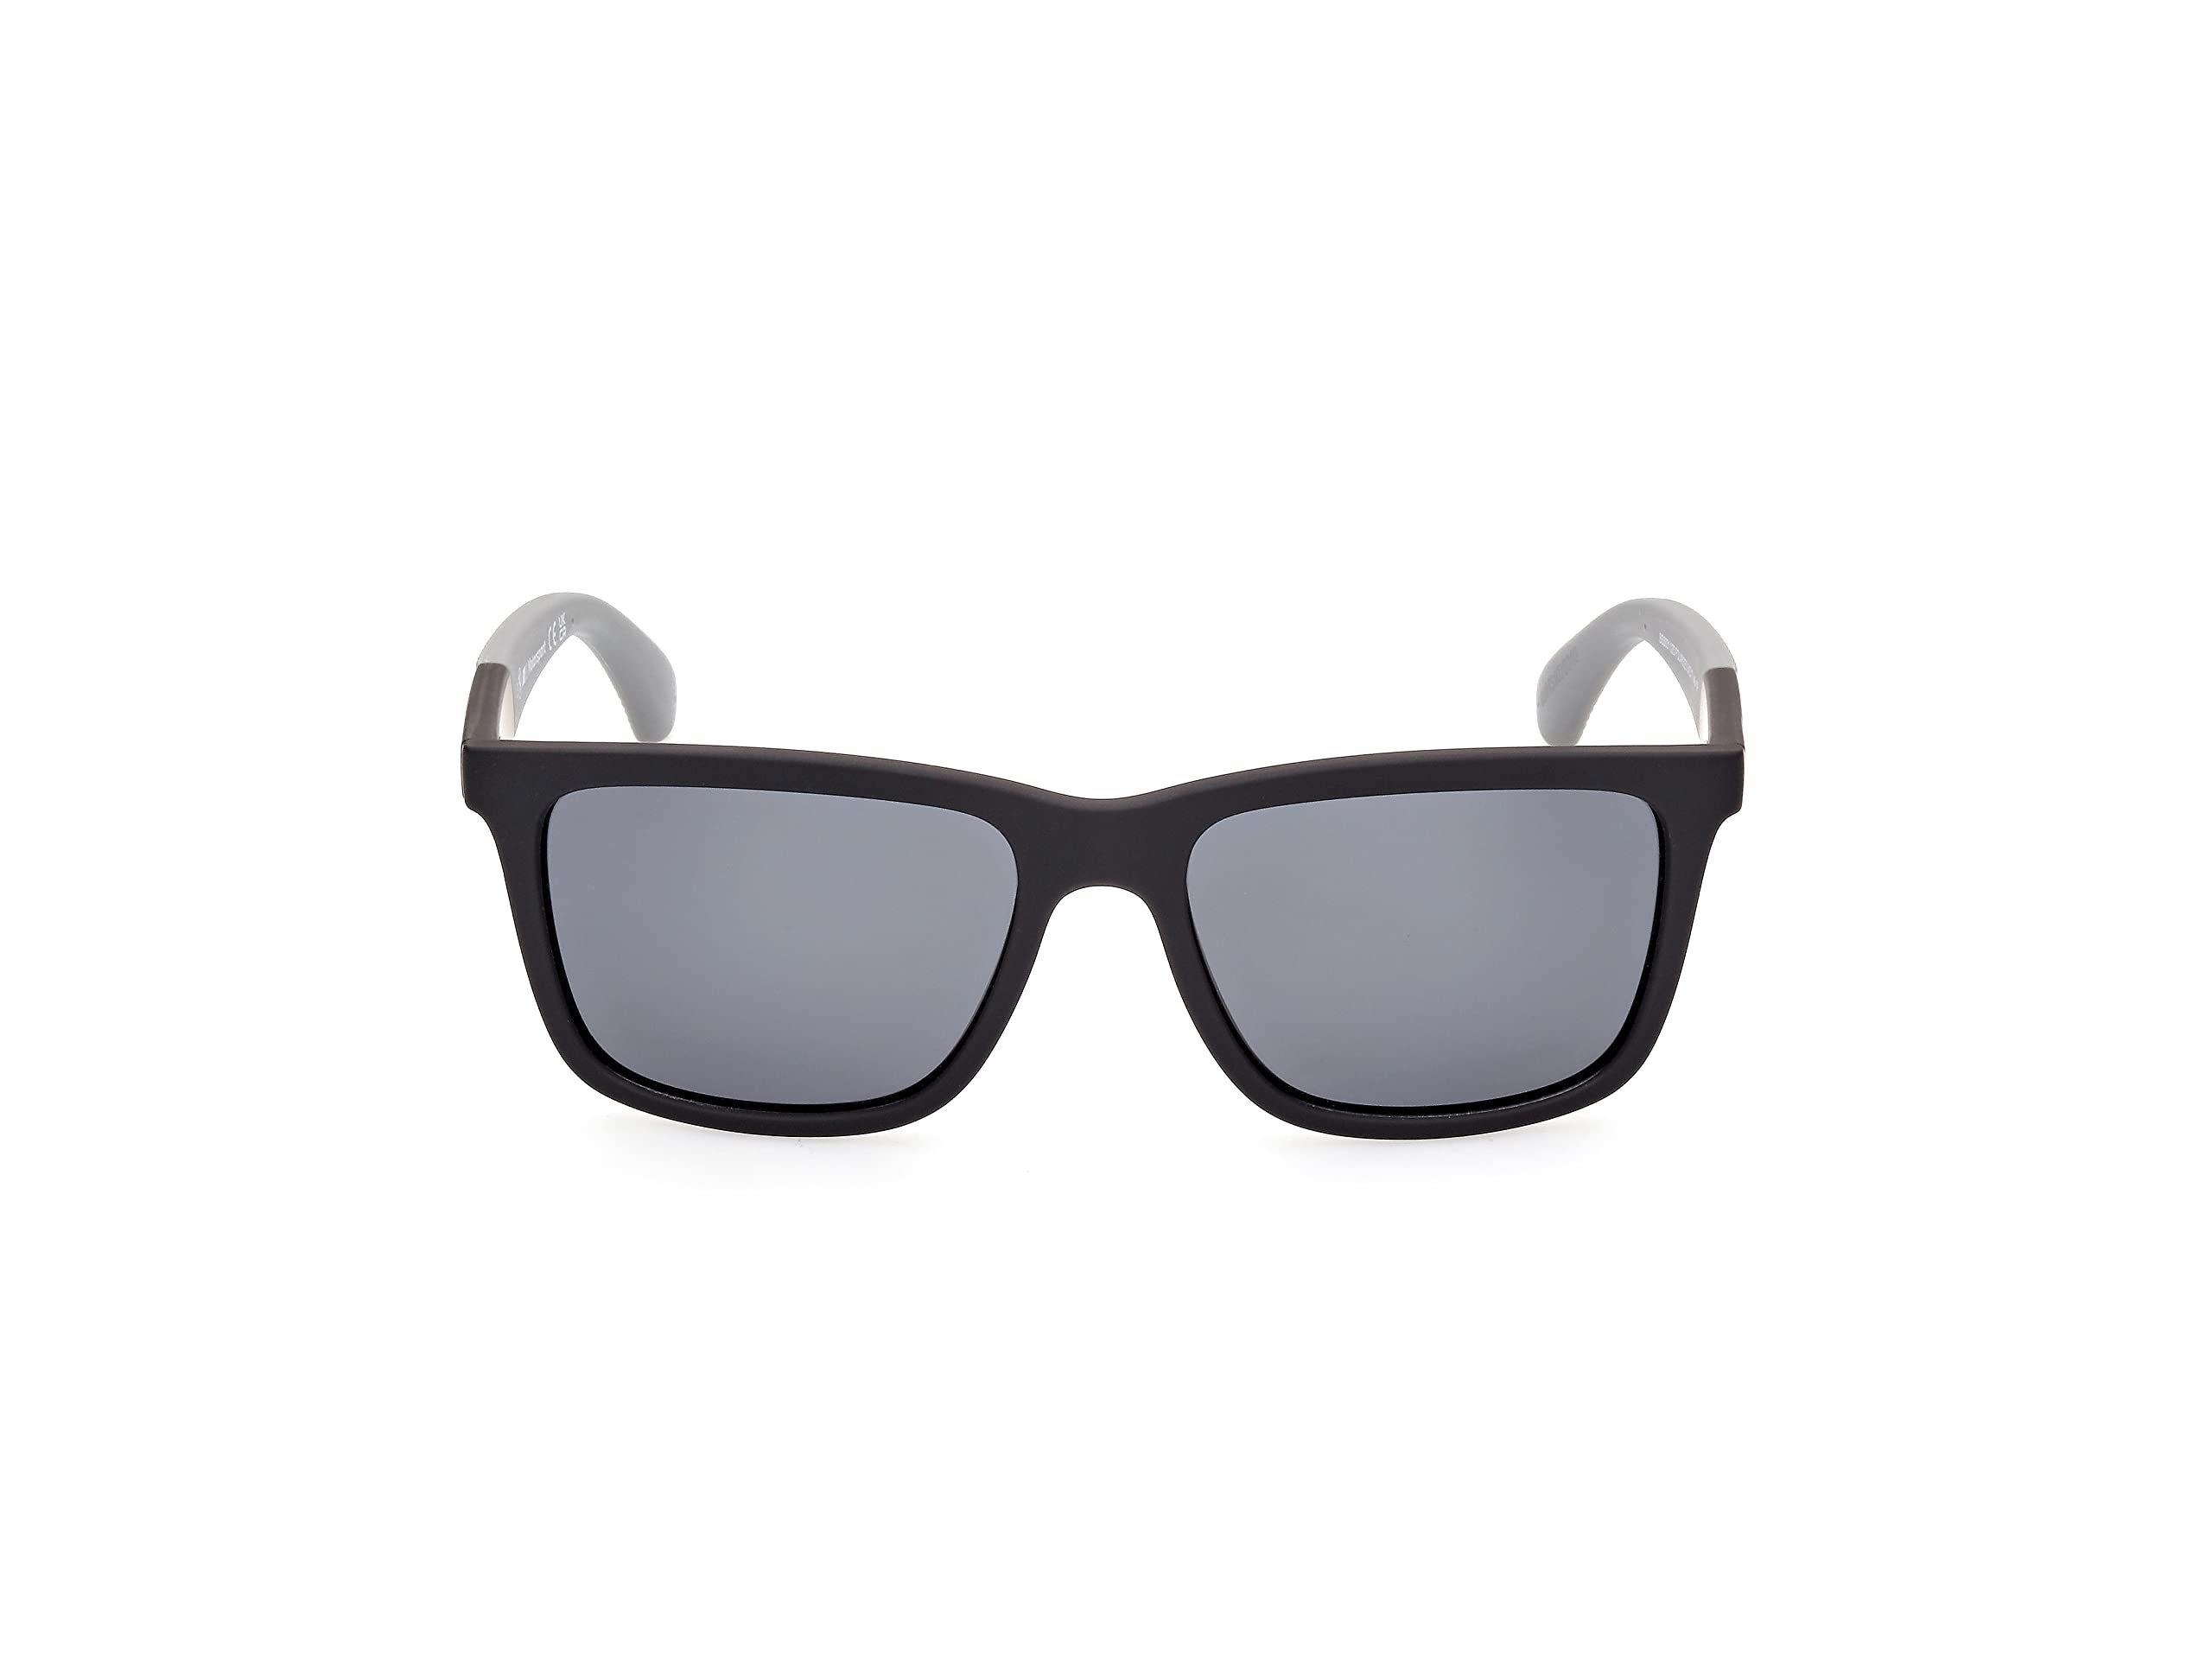 BMW Mens Injected Glasses Sunglasses, Matte Black, 54 US